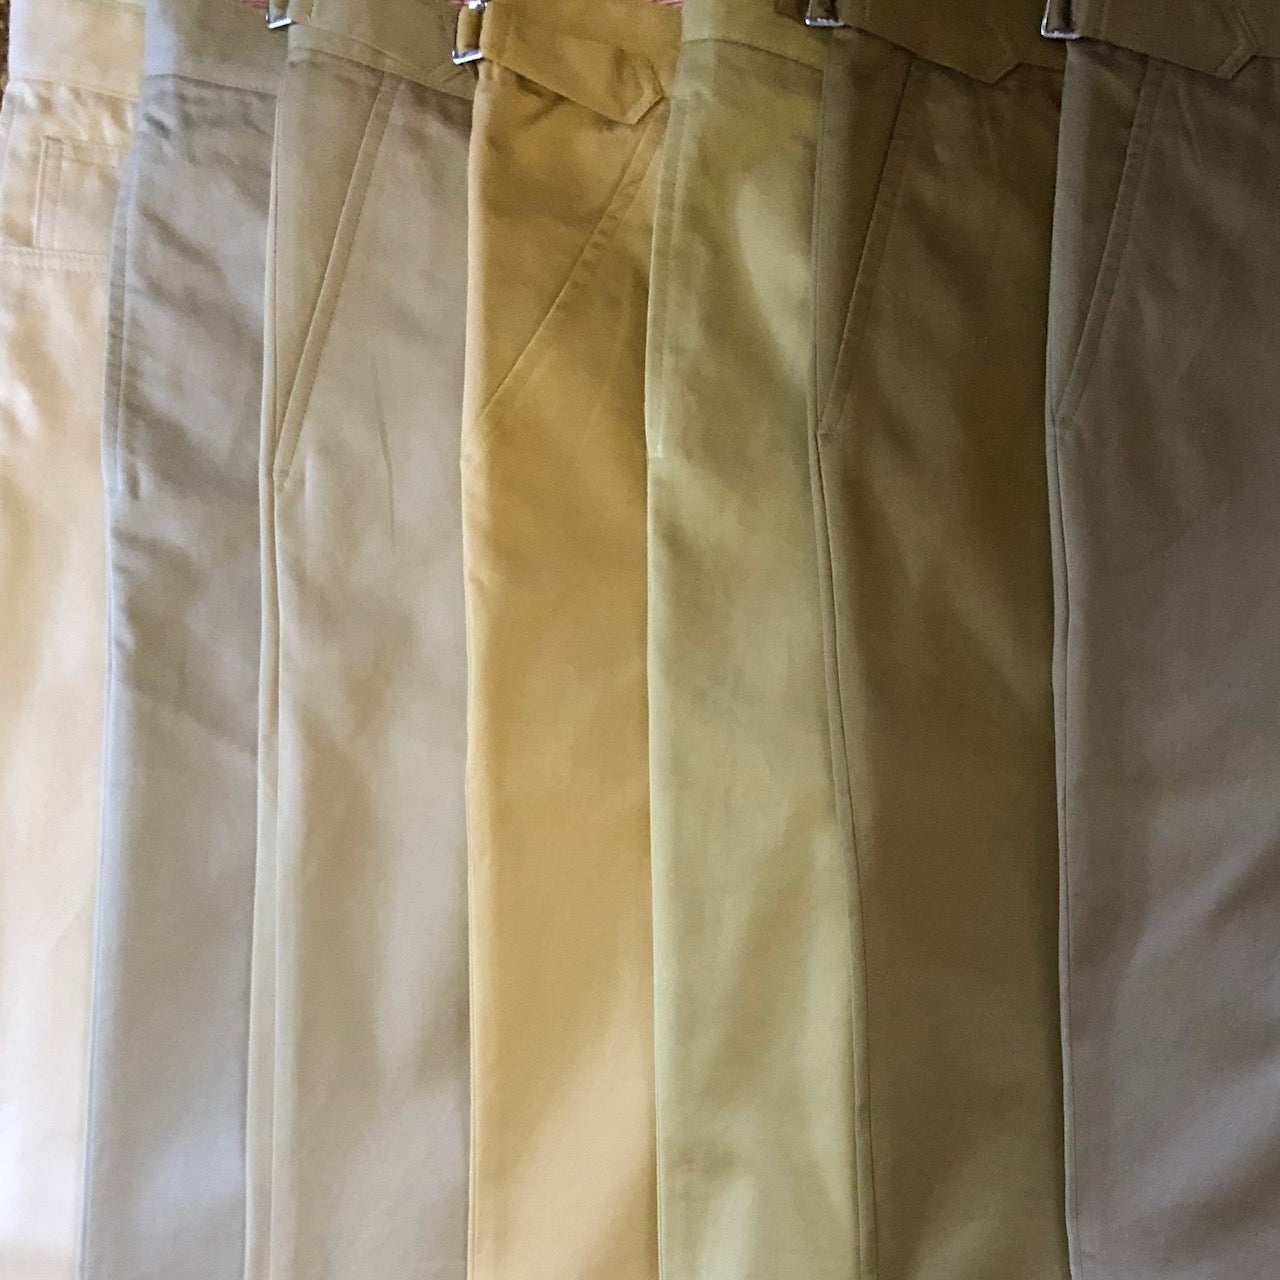 Udeshi custom khakis